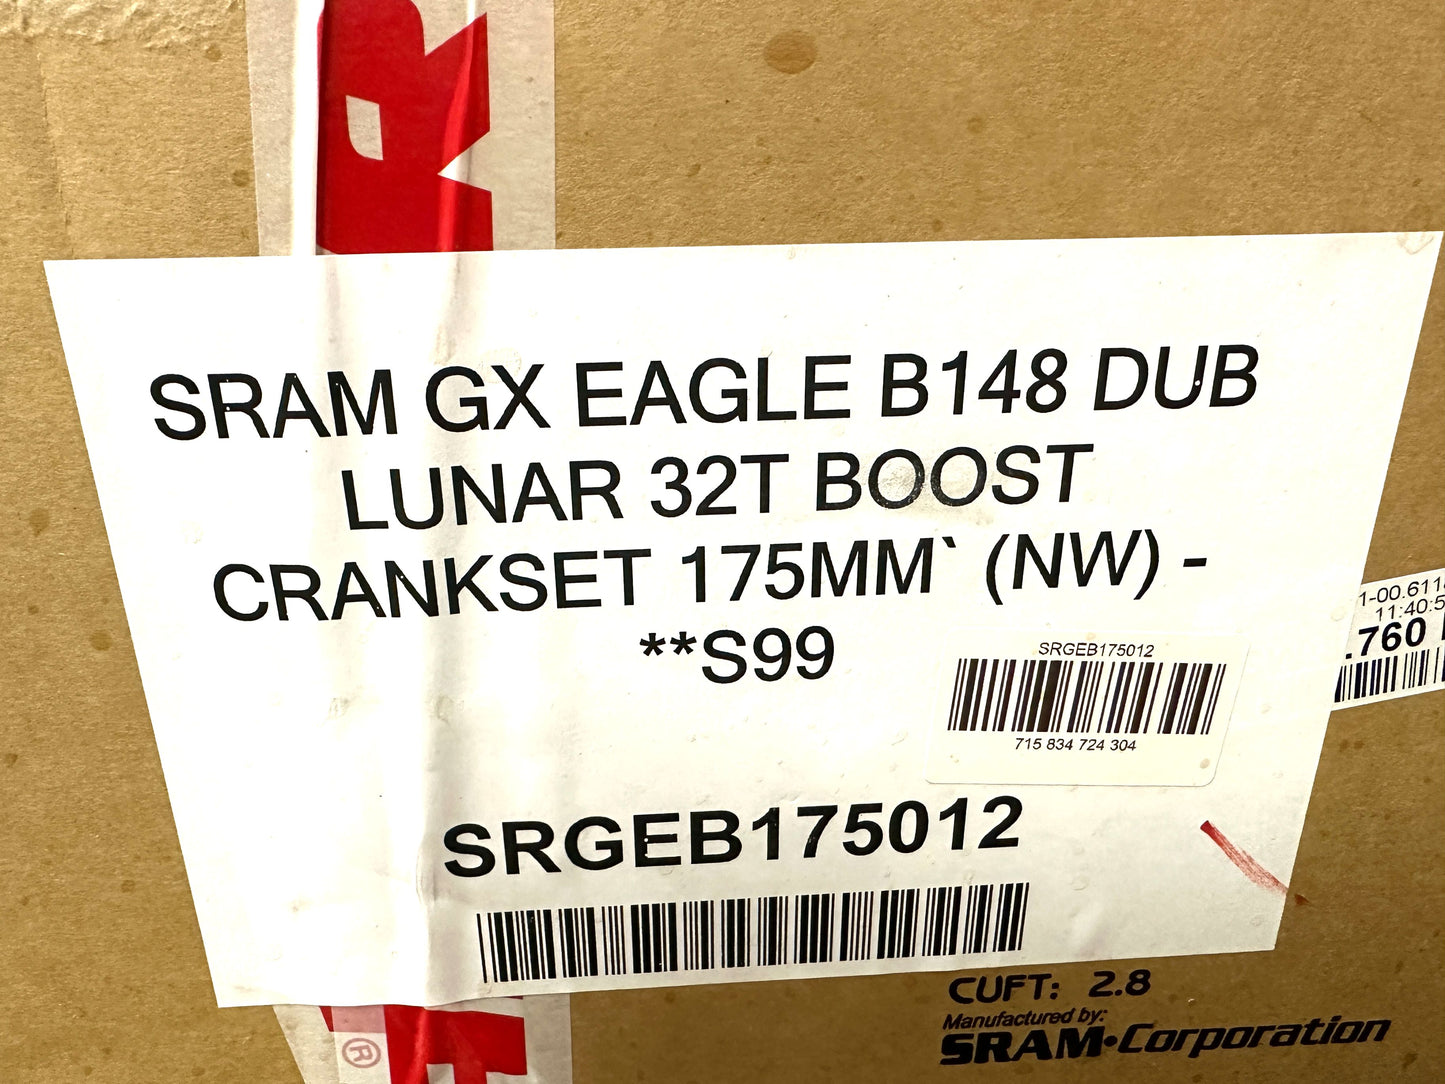 Sram GX Eagle B148 Dub Lunar 32t Boost Crankset 175mm 00.6118.592.012